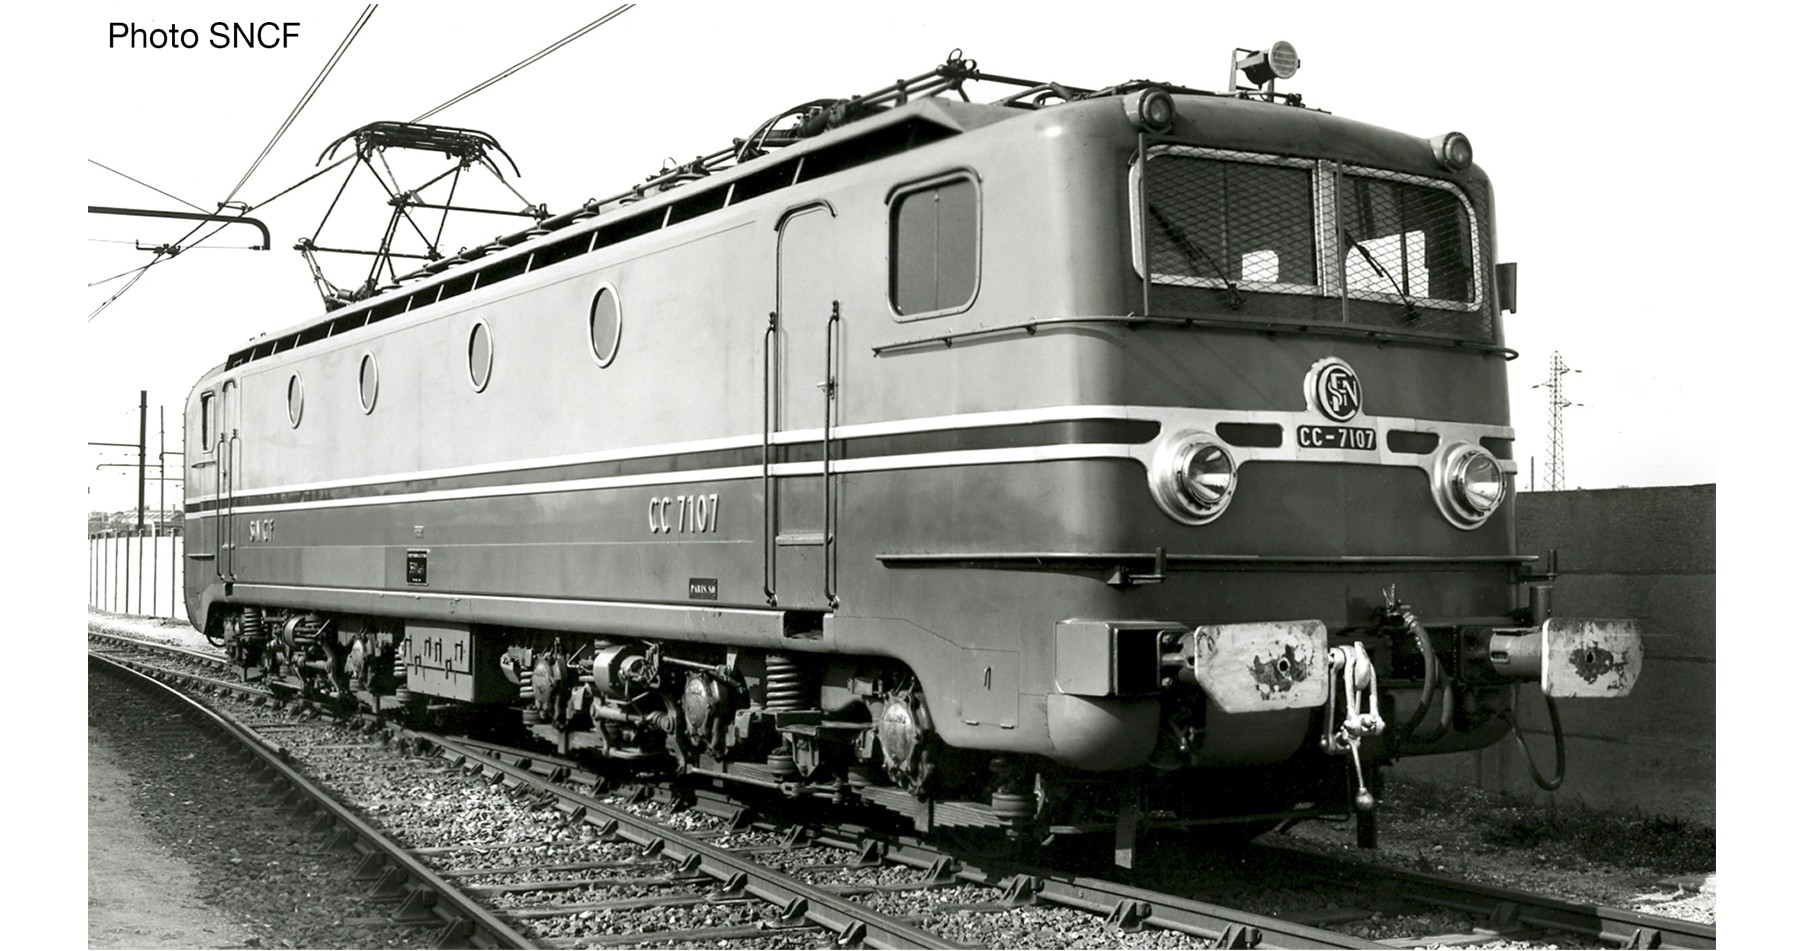 Kinovod300324 cc. Электровоз cc 7139. Cc 7107. Электровоз cc40101. SNCF cc 7139 электровоз.